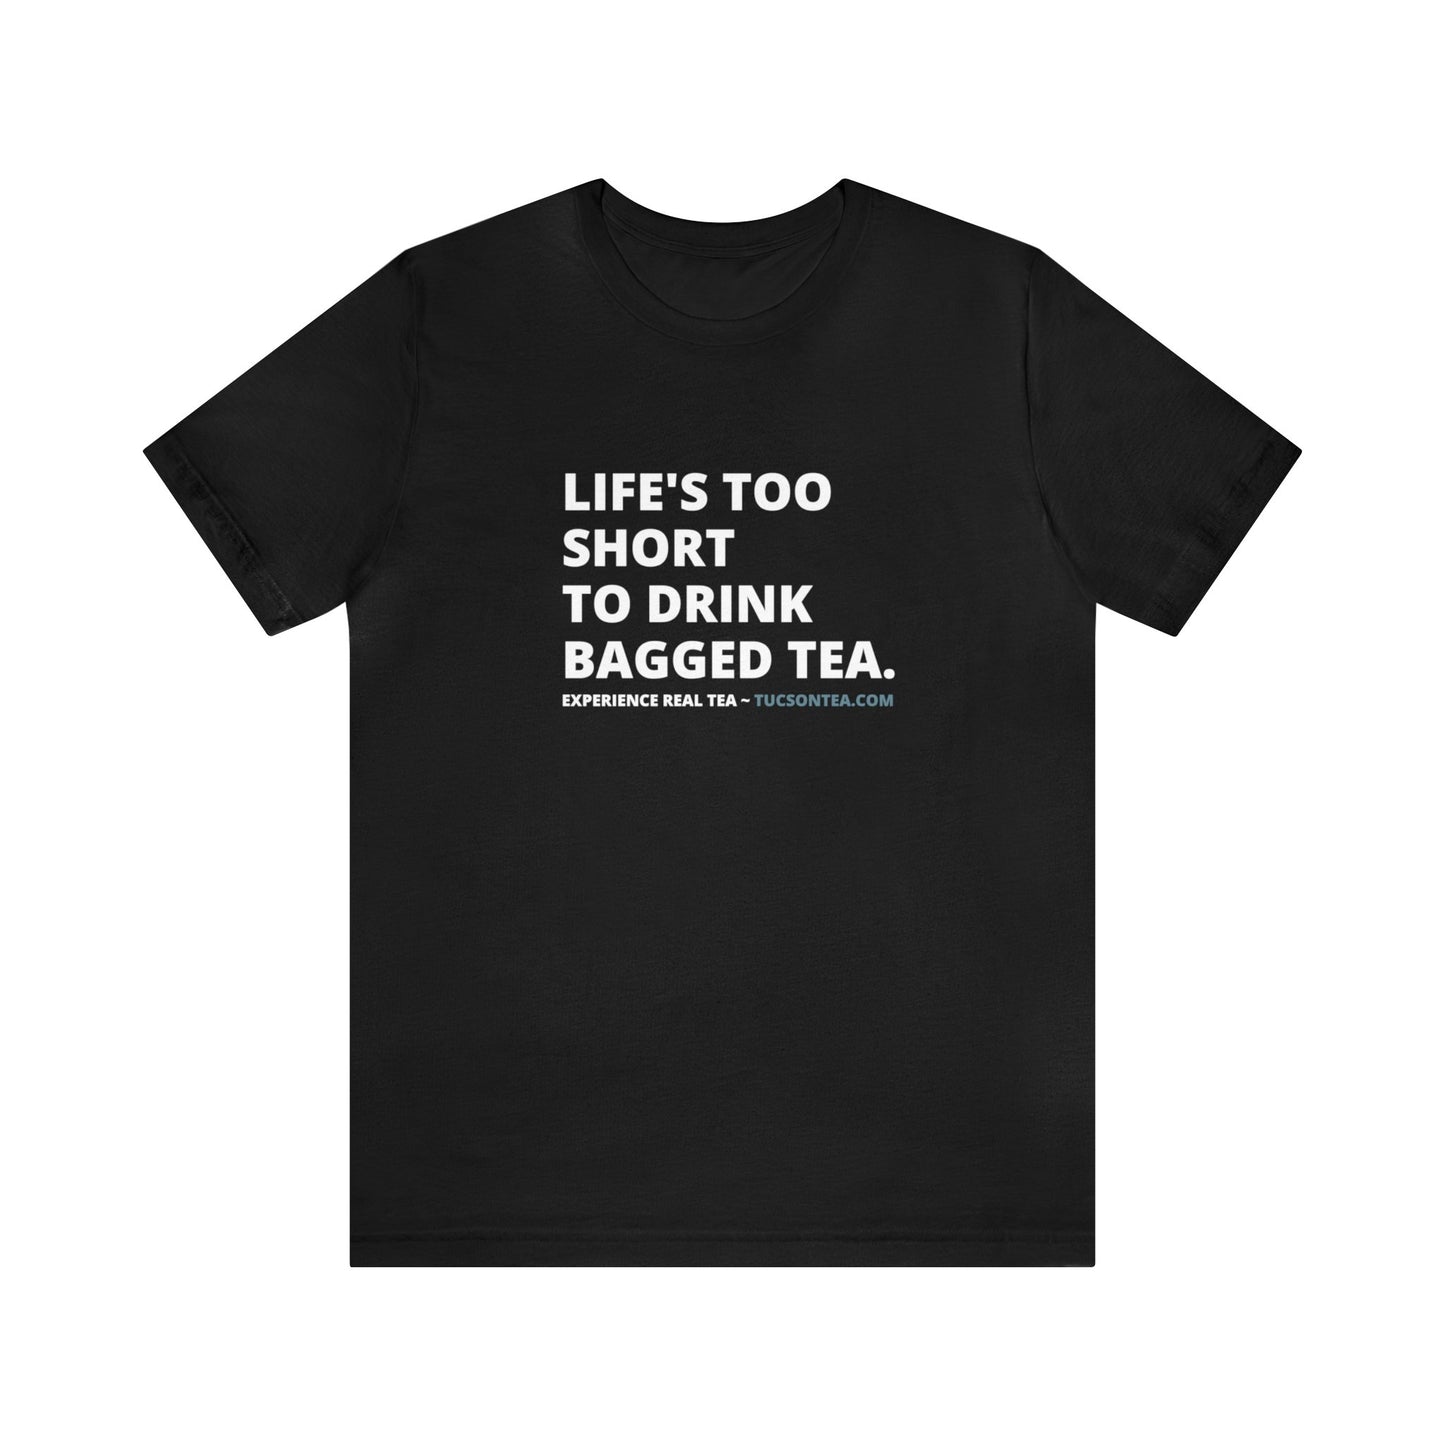 Tucson Tea Company custom shirt